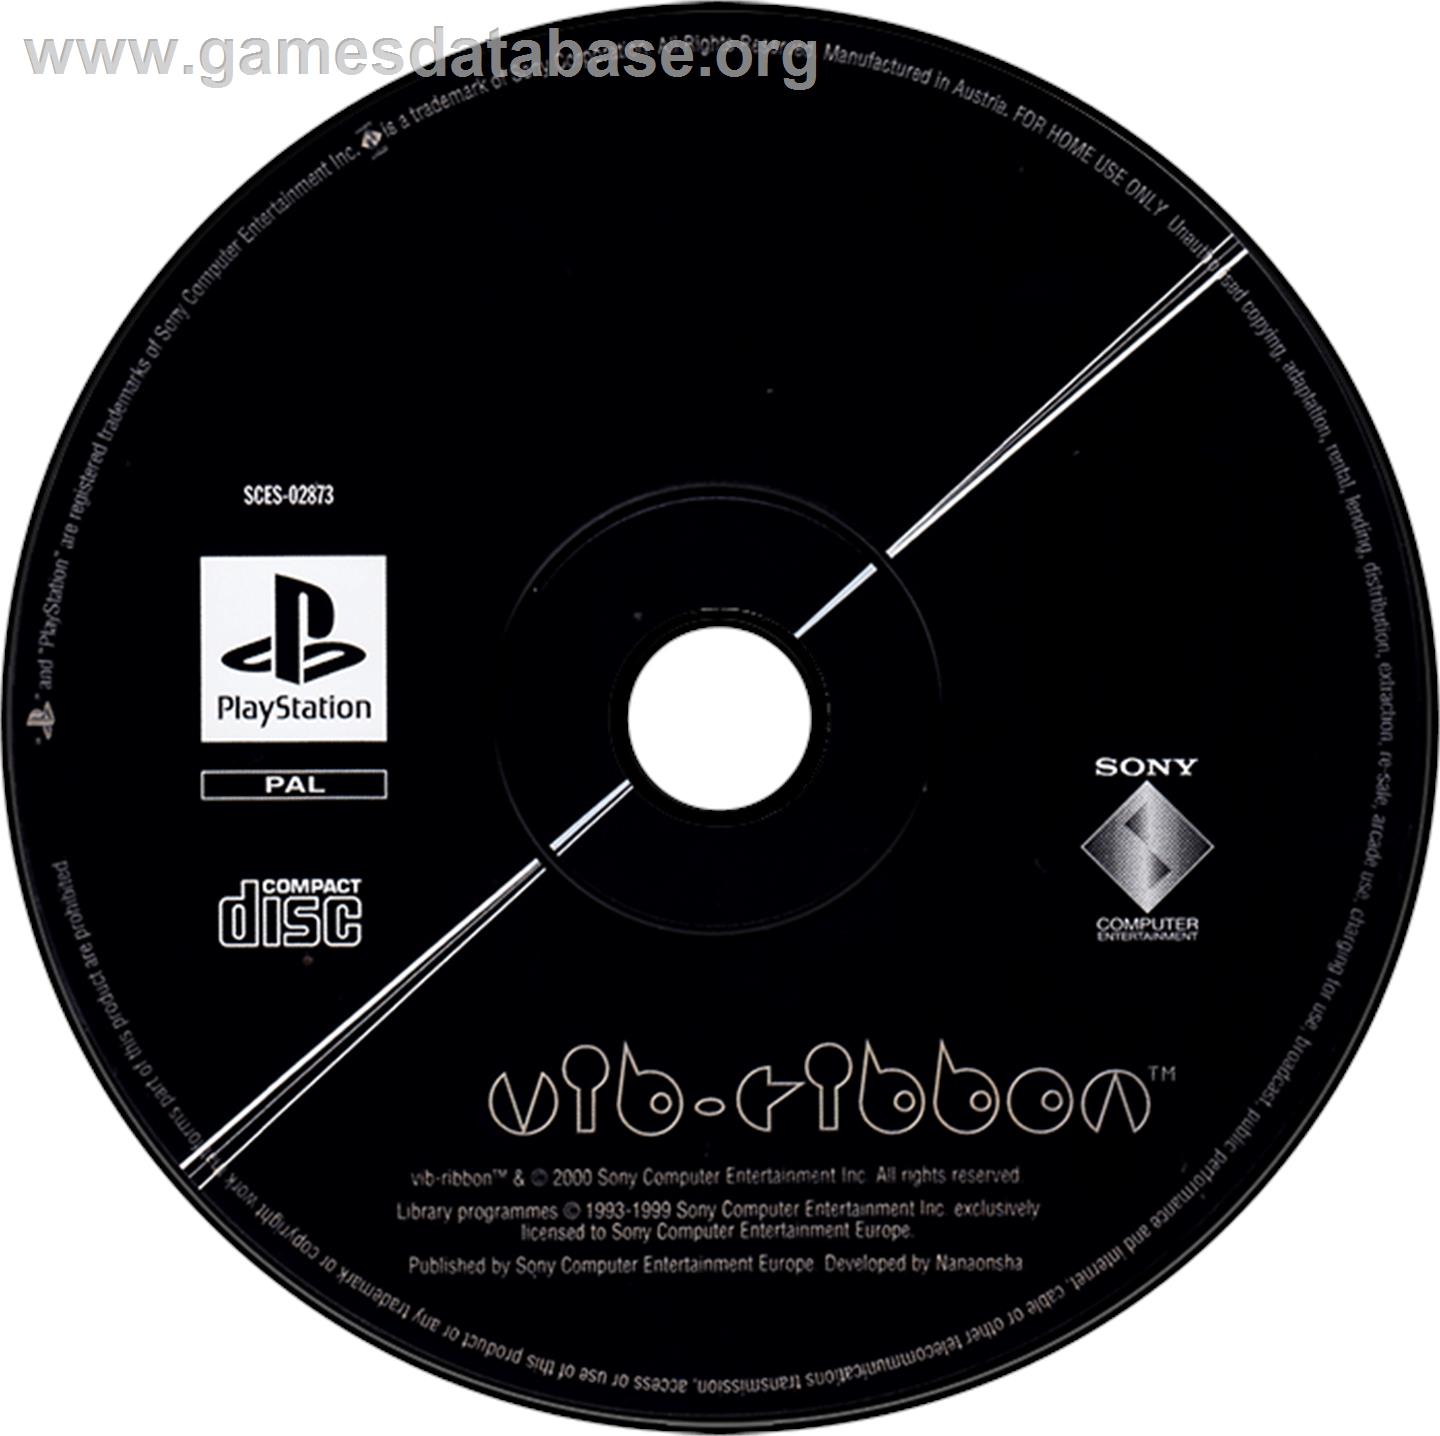 Vib Ribbon - Sony Playstation - Artwork - Disc